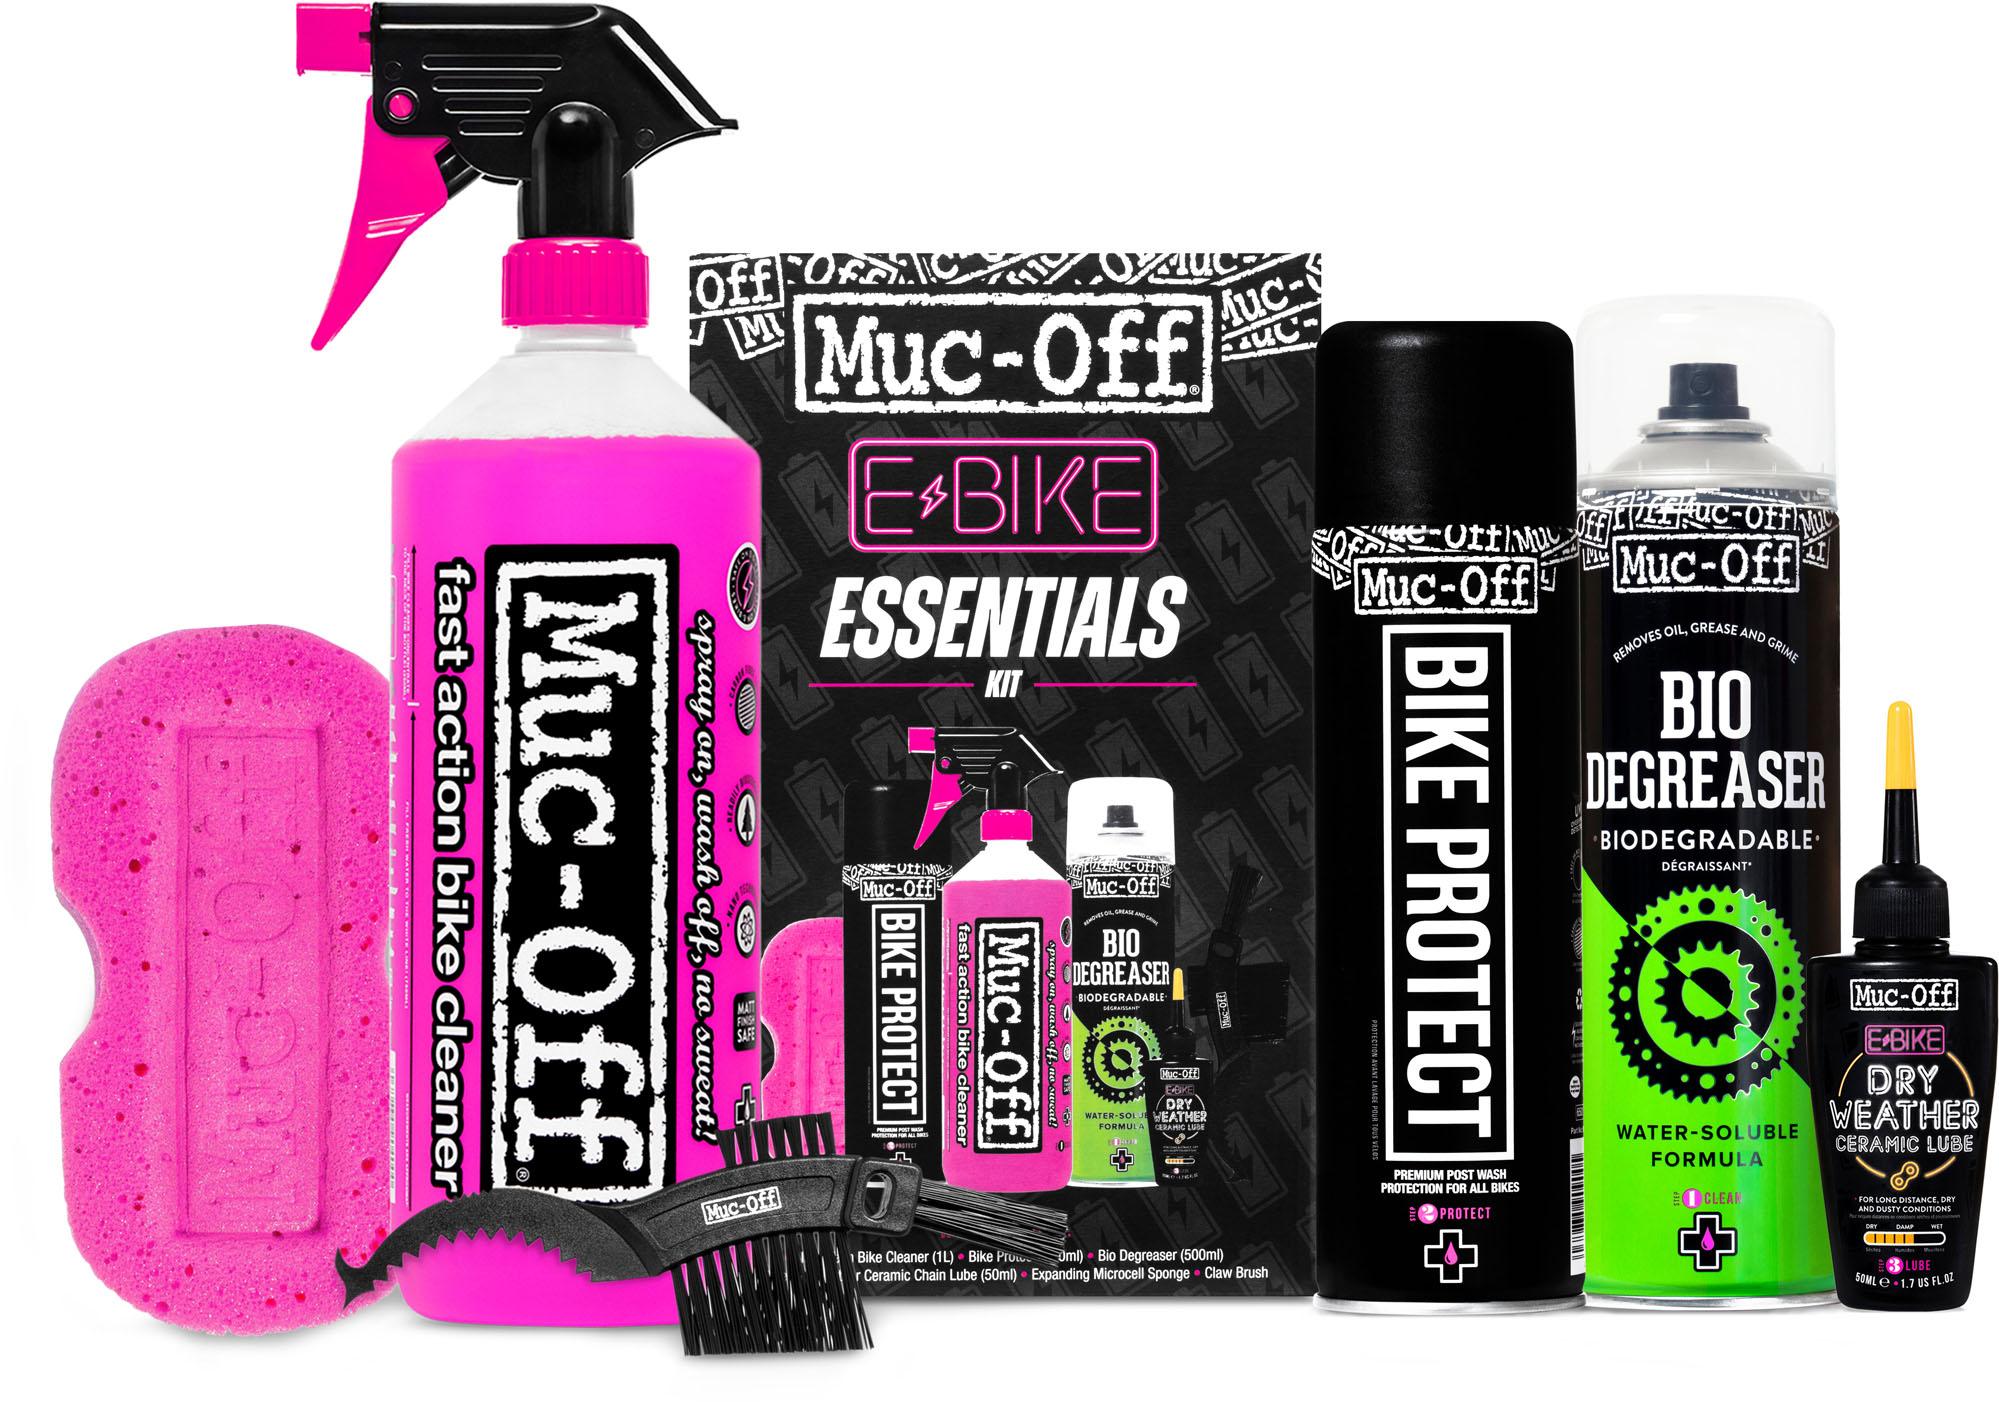 Muc-off Ebike Essentials Kit - Black